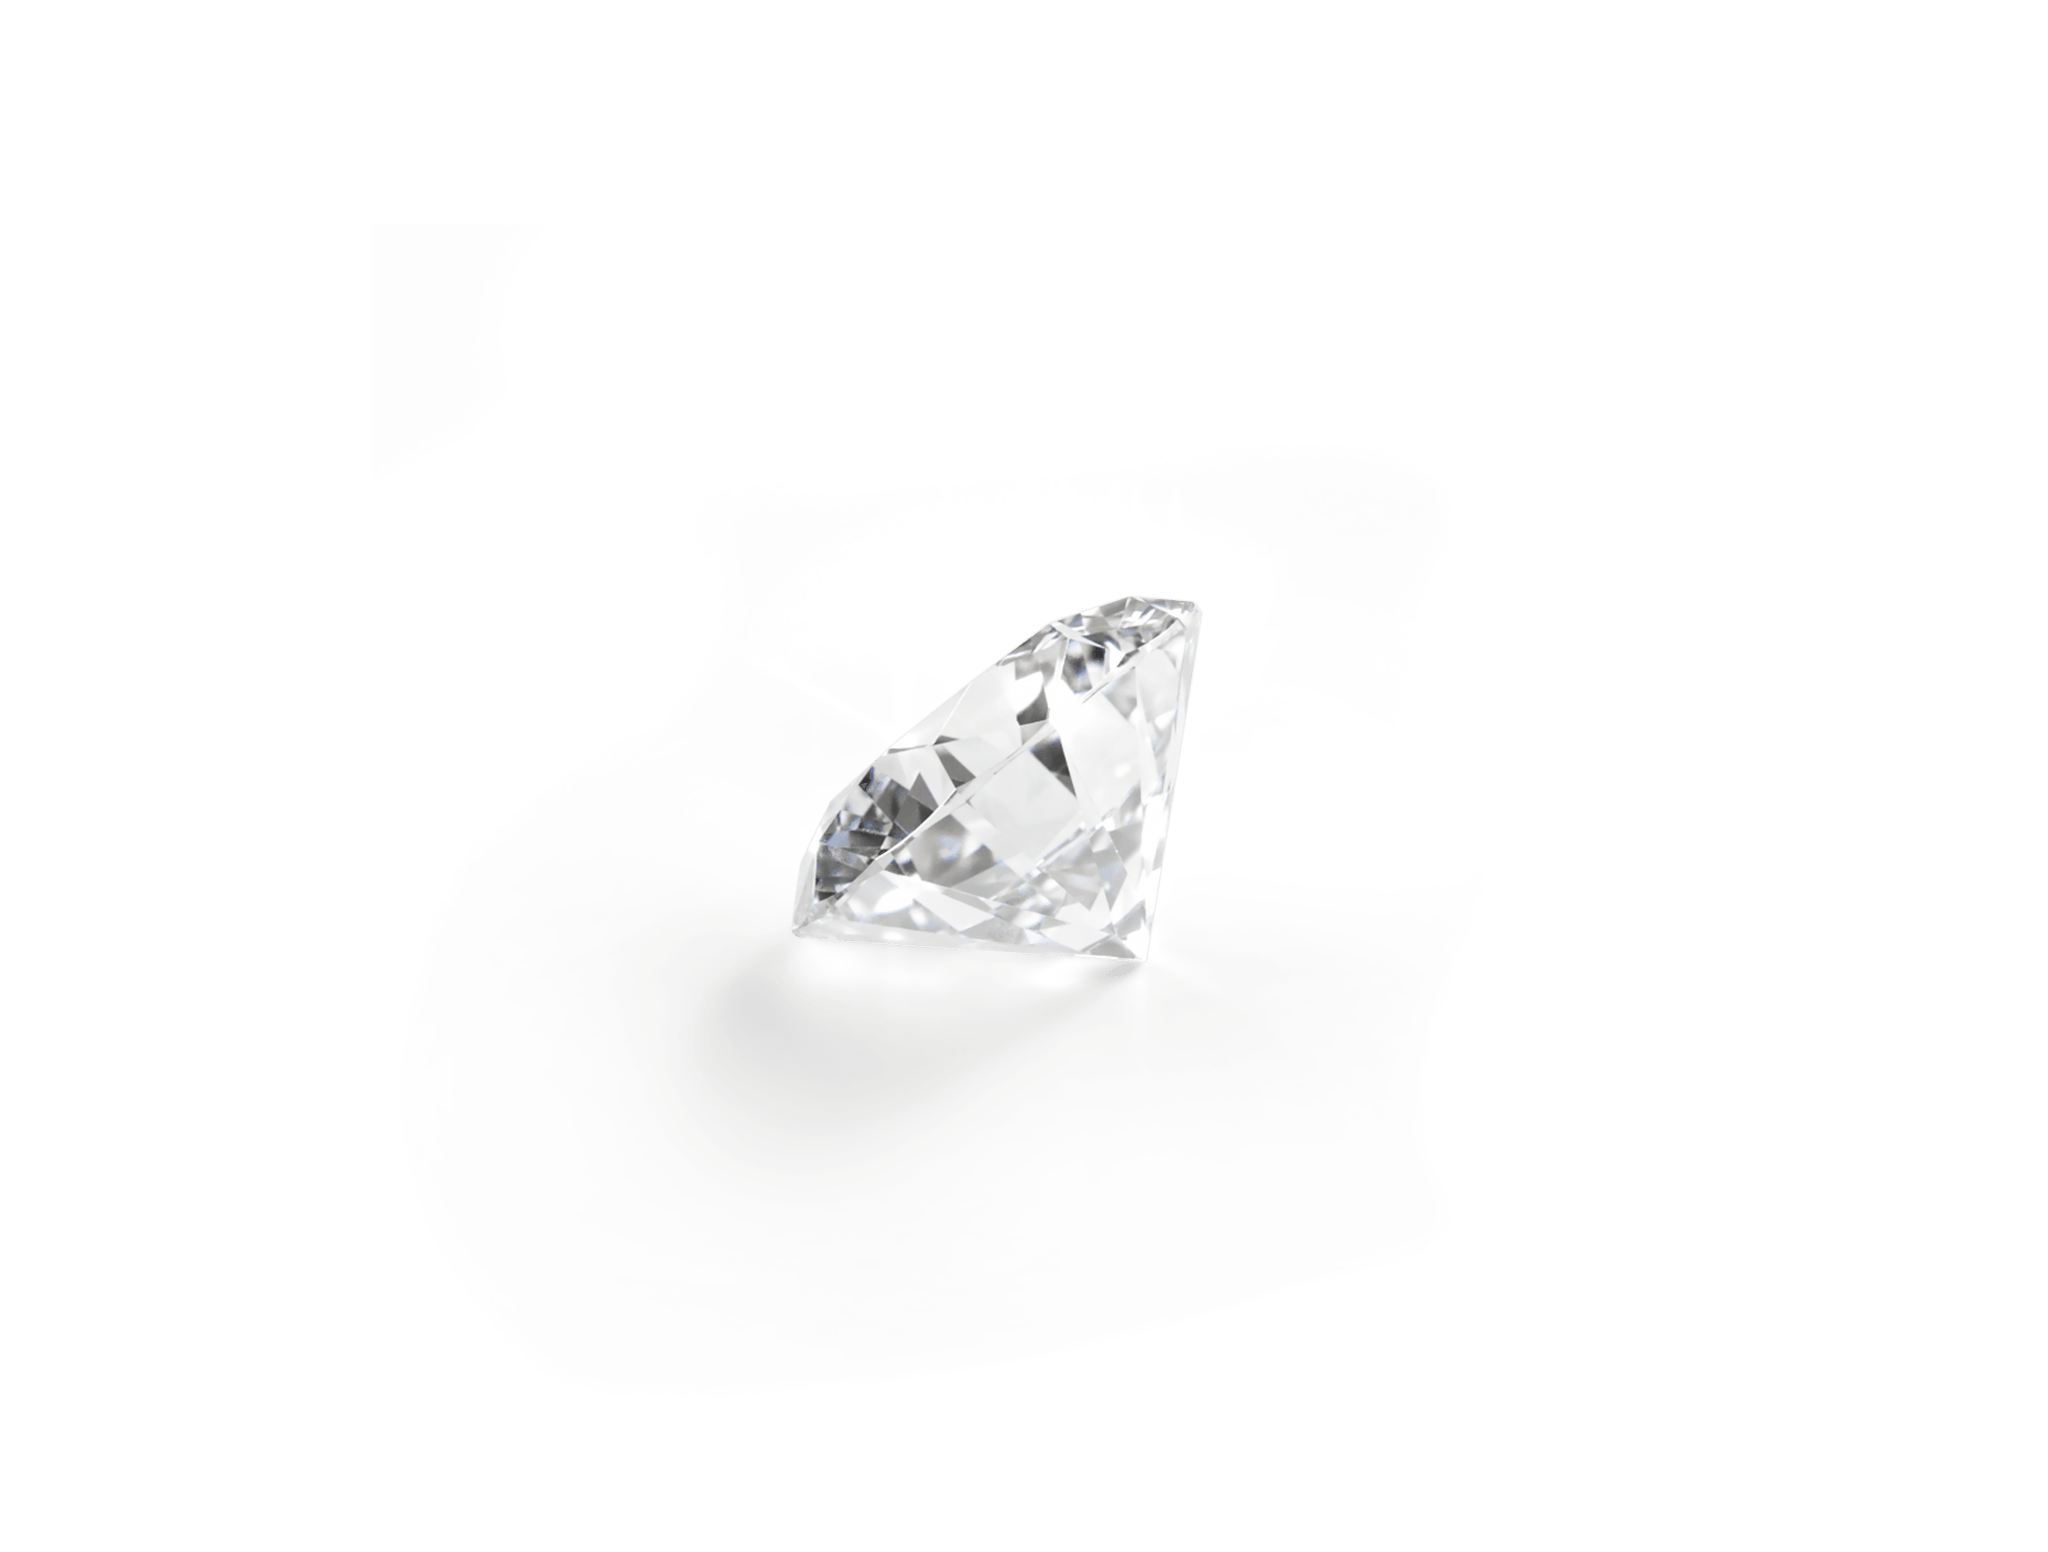 Lab-Grown Loose 1¾ct. Round Brilliant Diamond | White - #Lightbox Jewelry#